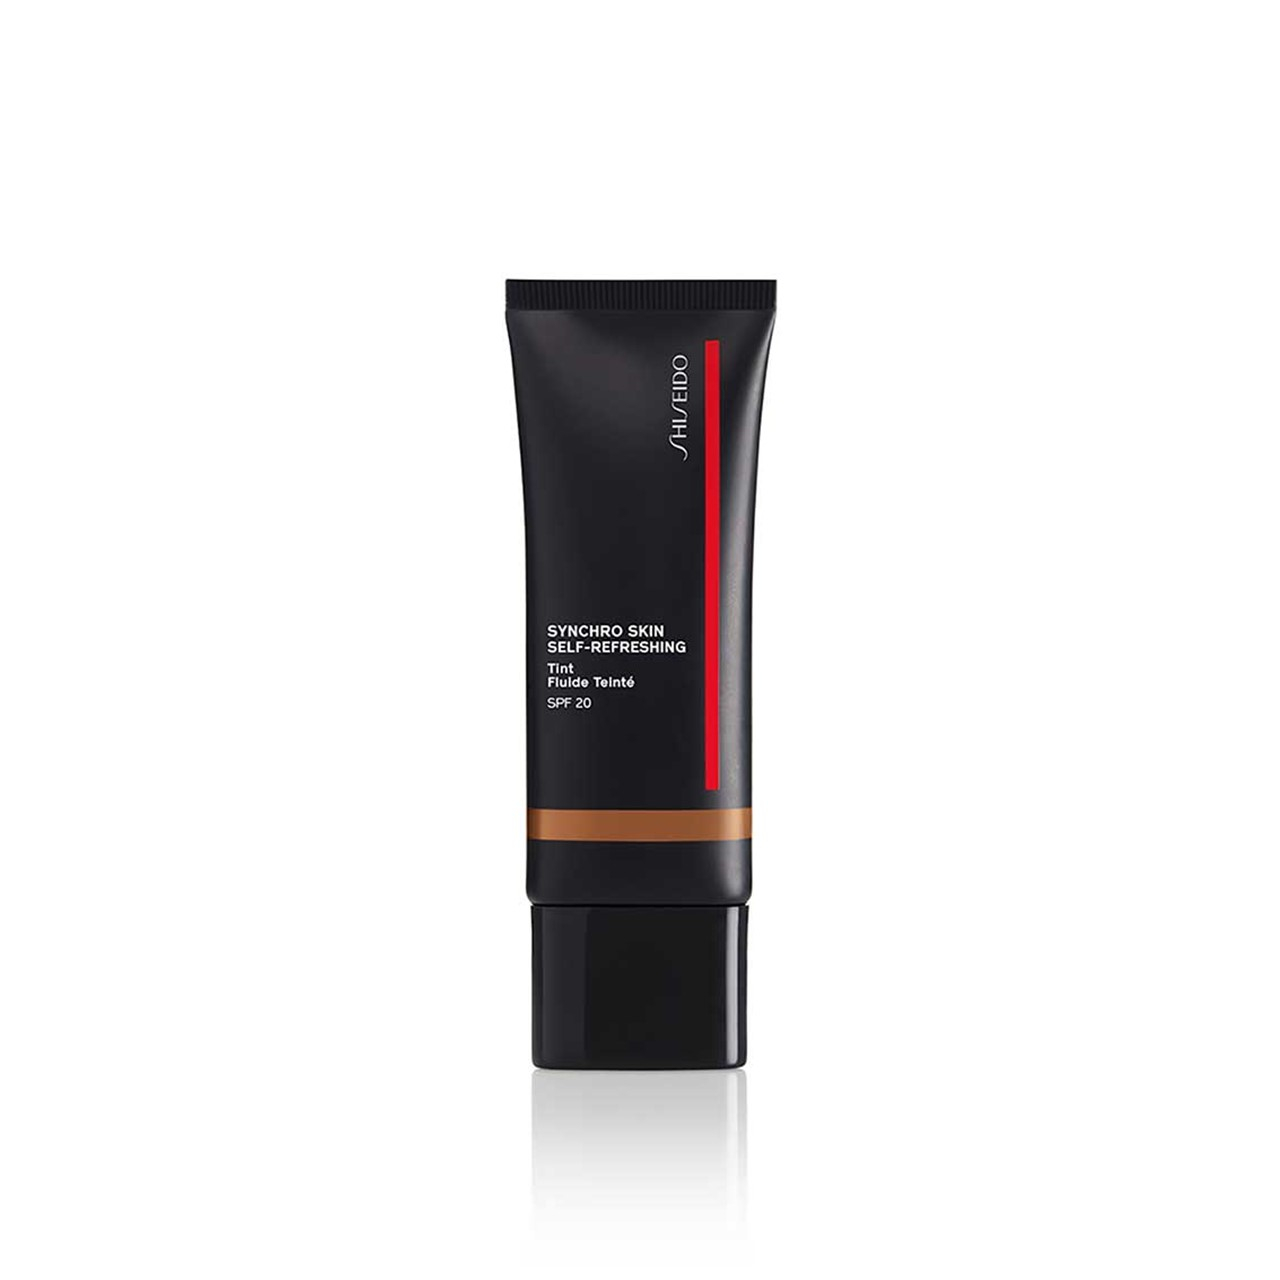 Shiseido Synchro Skin Self-Refreshing Tint SPF20 515 Deep Tsubaki 30ml (1.01fl oz)